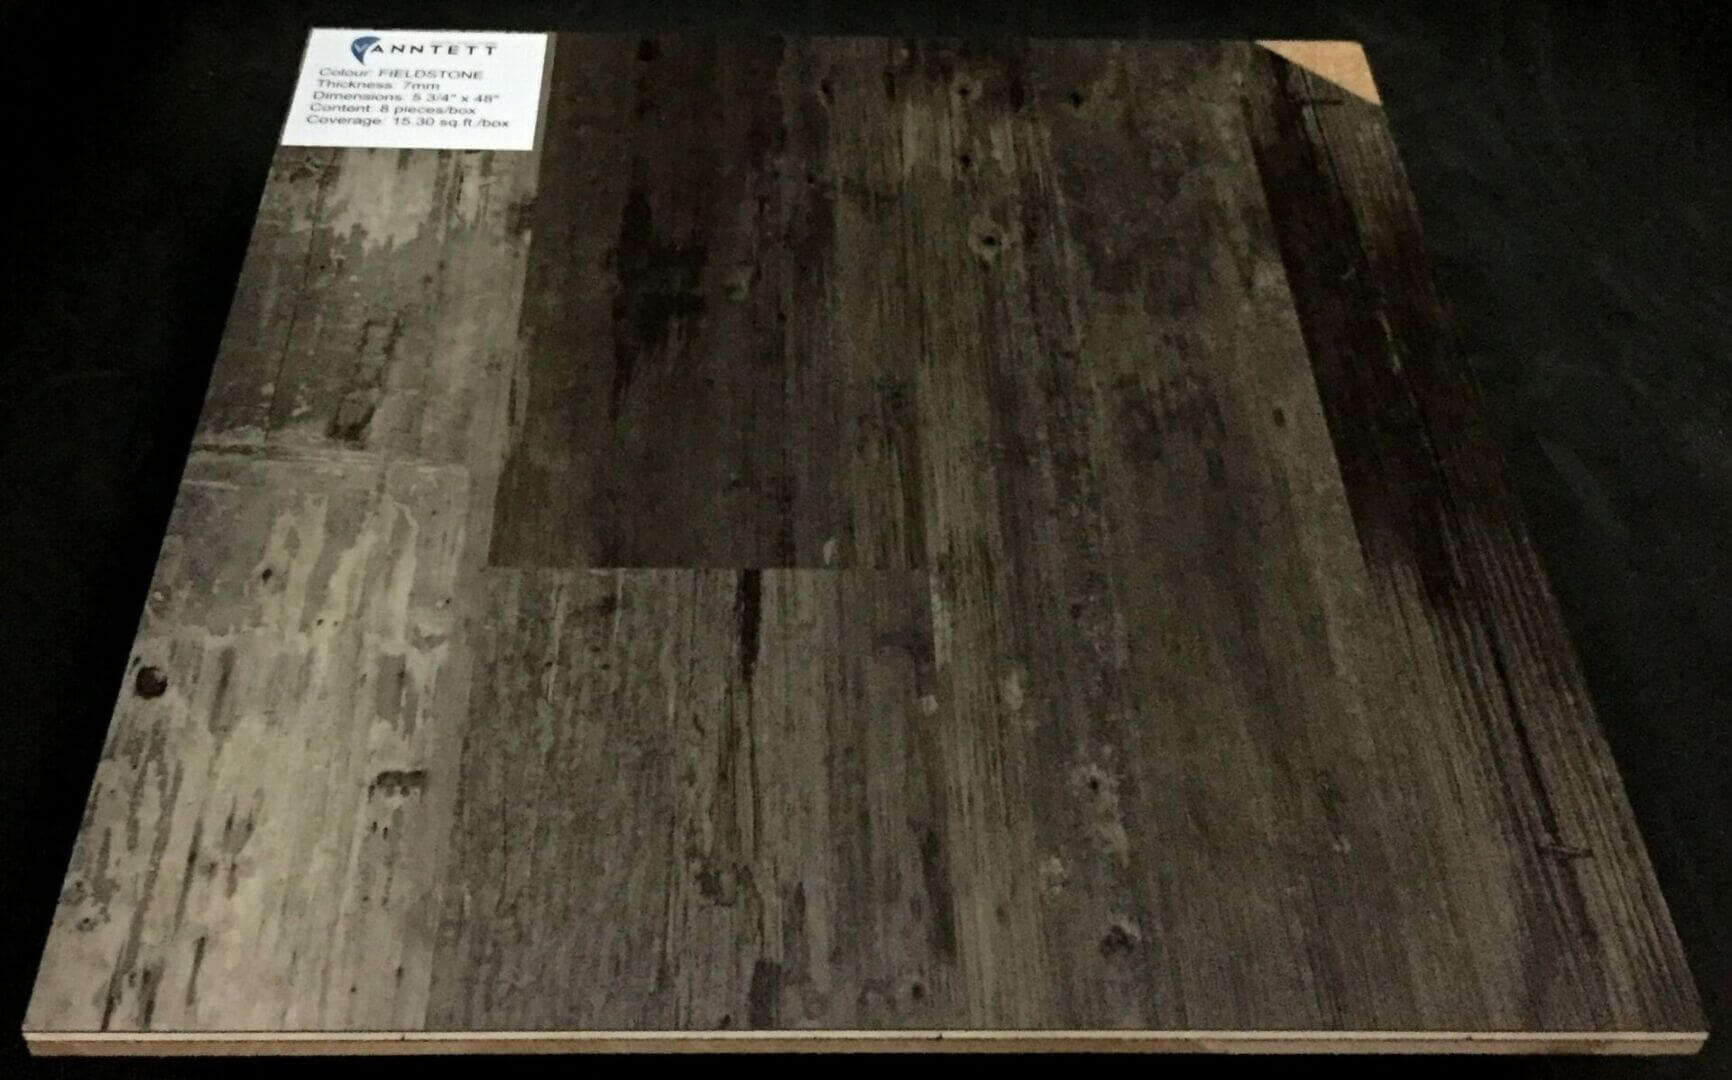 Vanntett Luxury Vinyl Plank Flooring, Best Vinyl Plank Flooring With Cork Backing